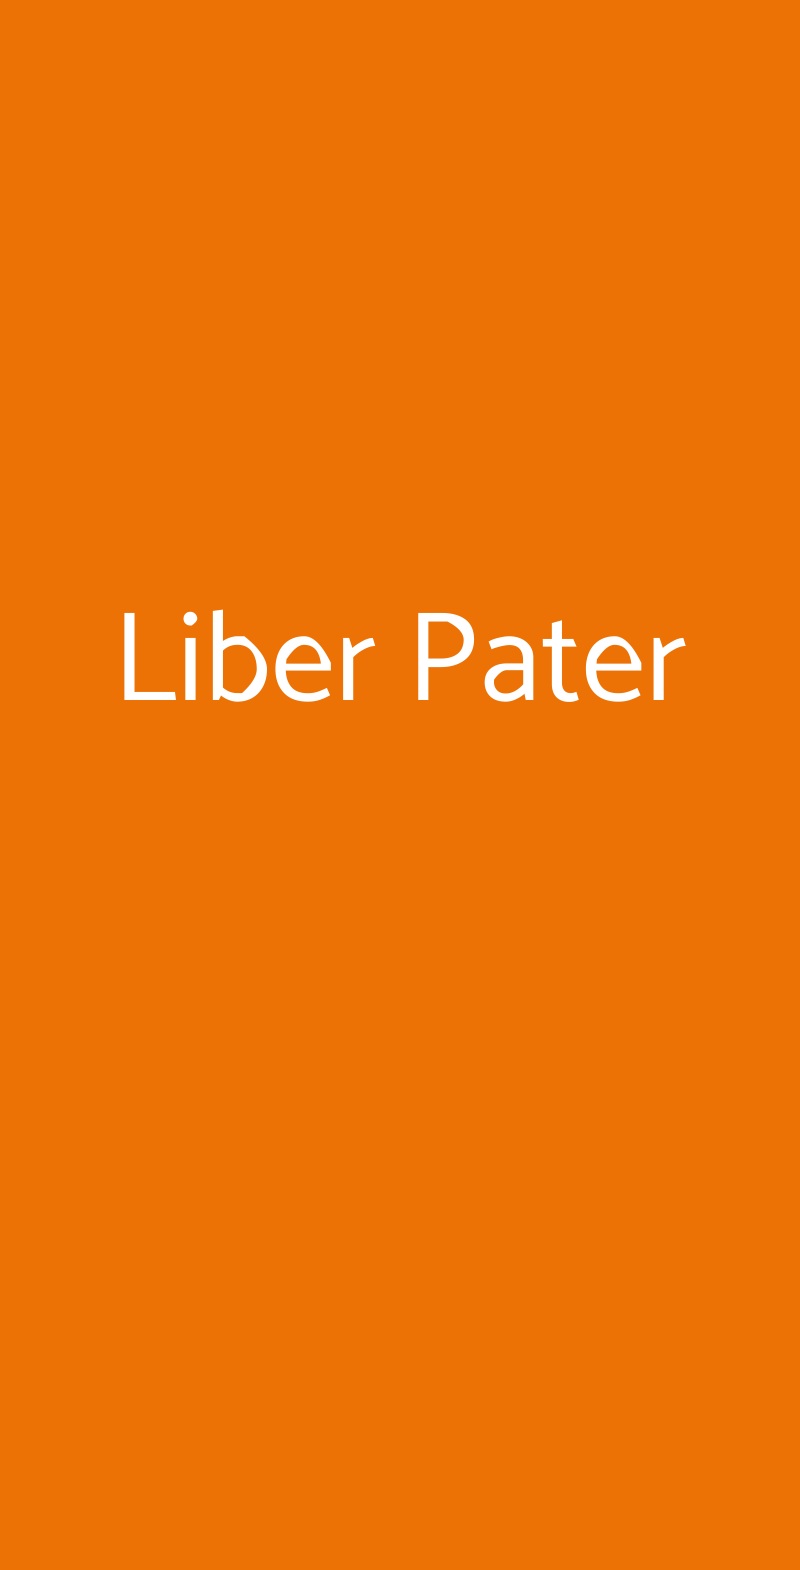 Liber Pater Milano menù 1 pagina